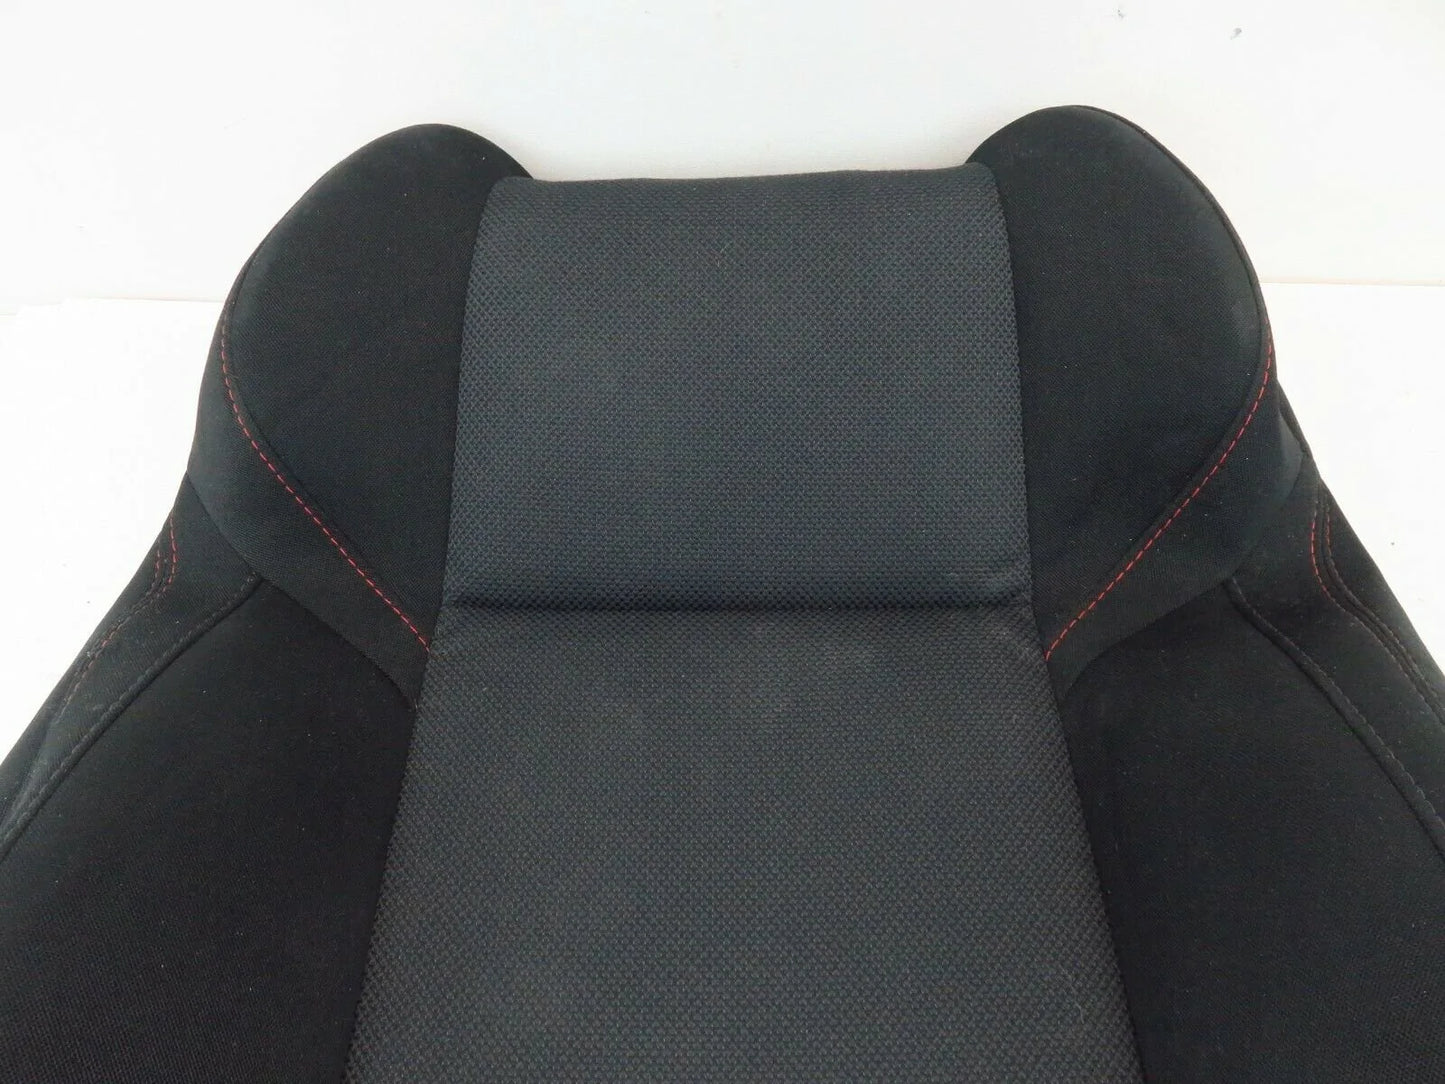 15-17 Subaru WRX Passenger Front Seat Cover Skin Upper Top Back RH 2015-2017